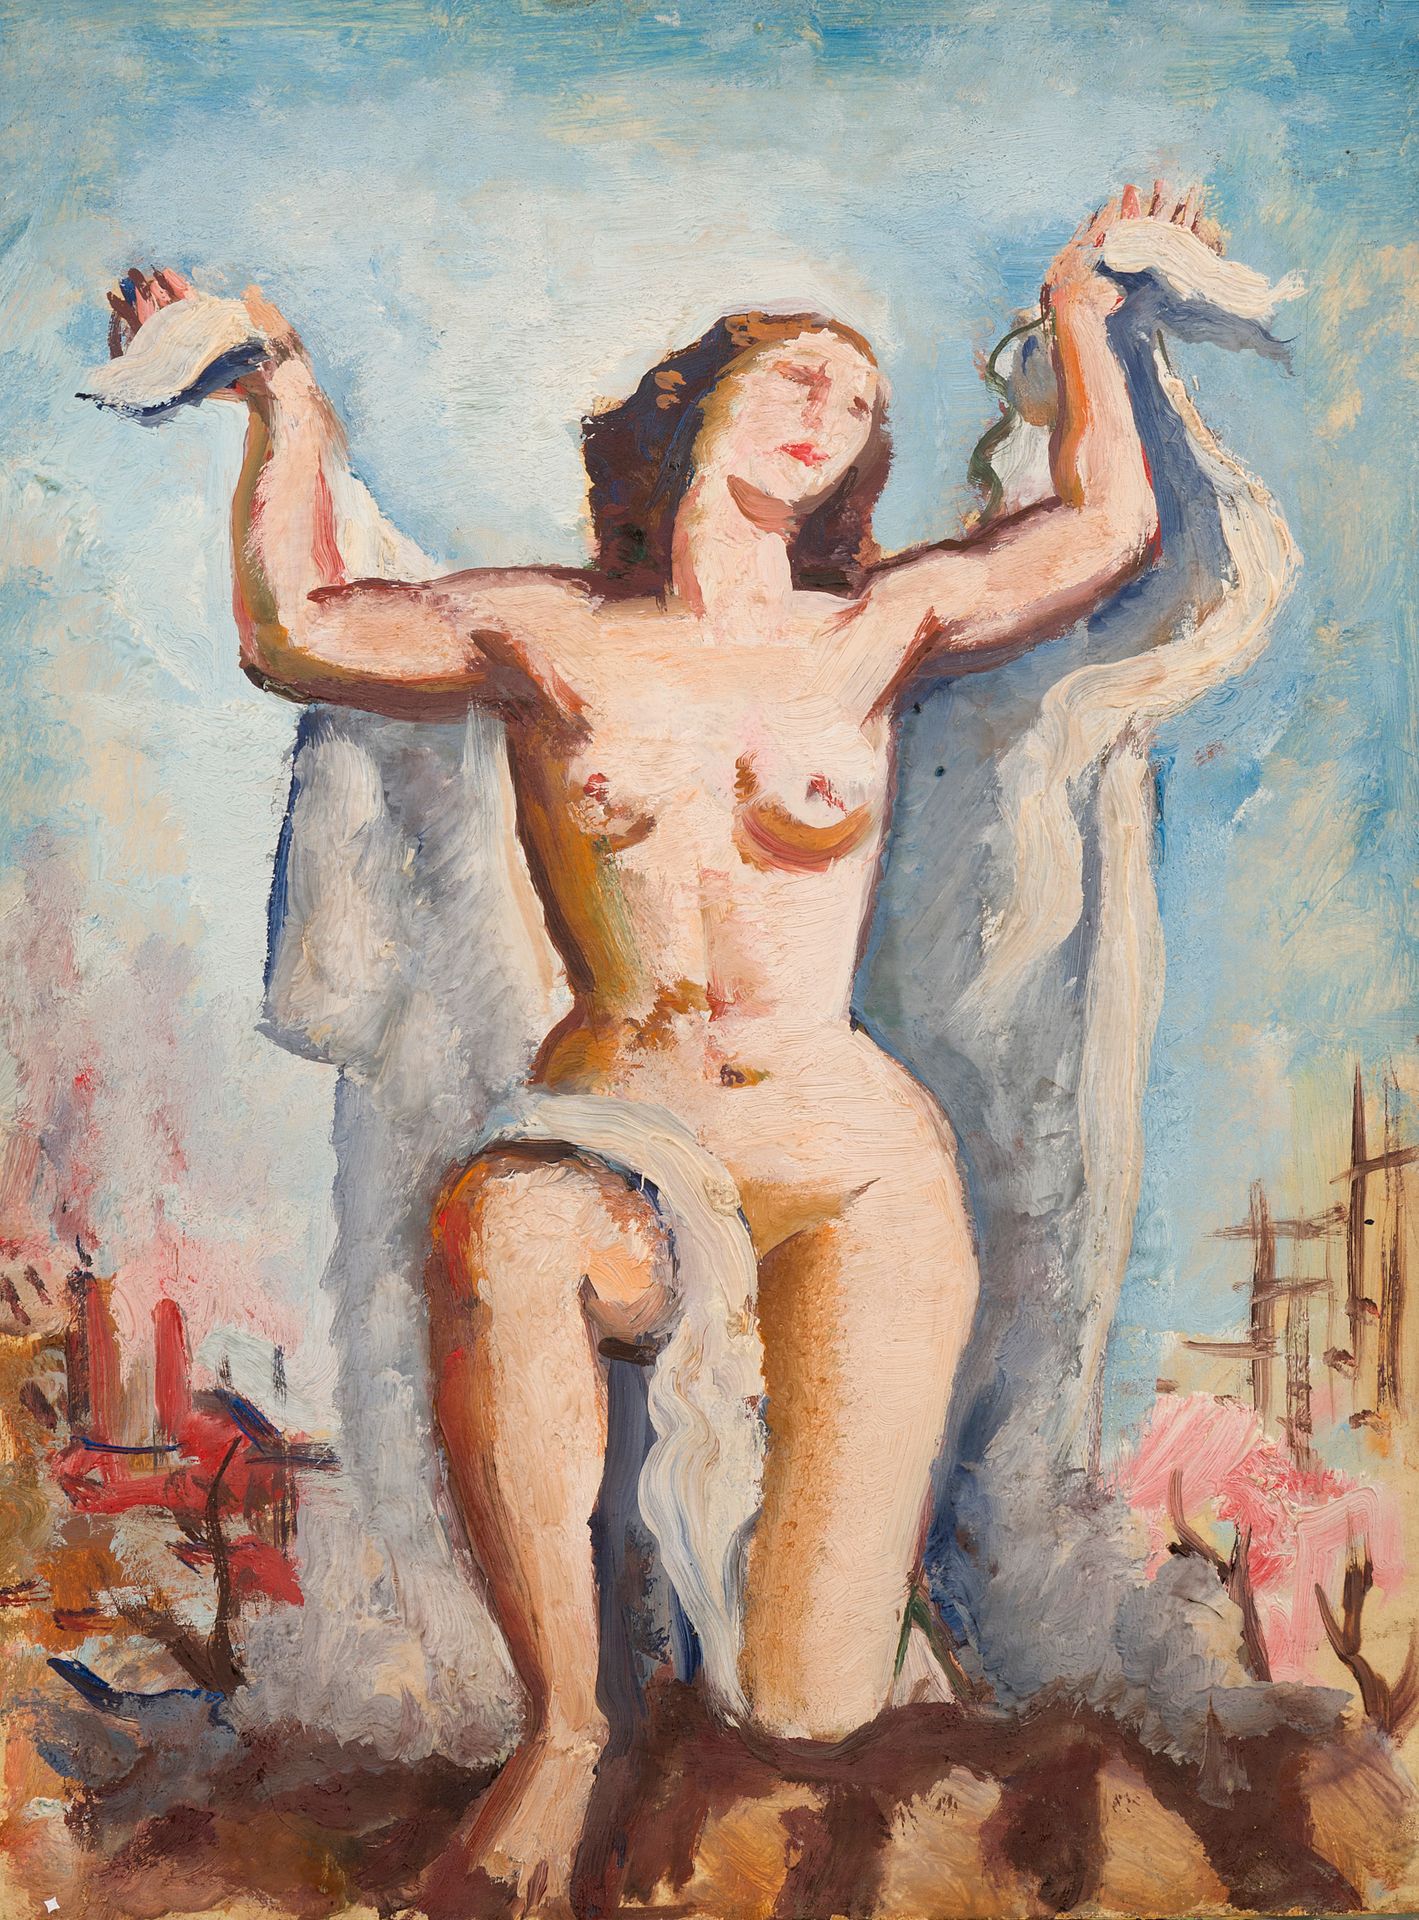 Null 查尔斯-皮卡特-勒杜(1881-1959)
寓言》，1937年
油料在伊索尔上
33 x 24 cm